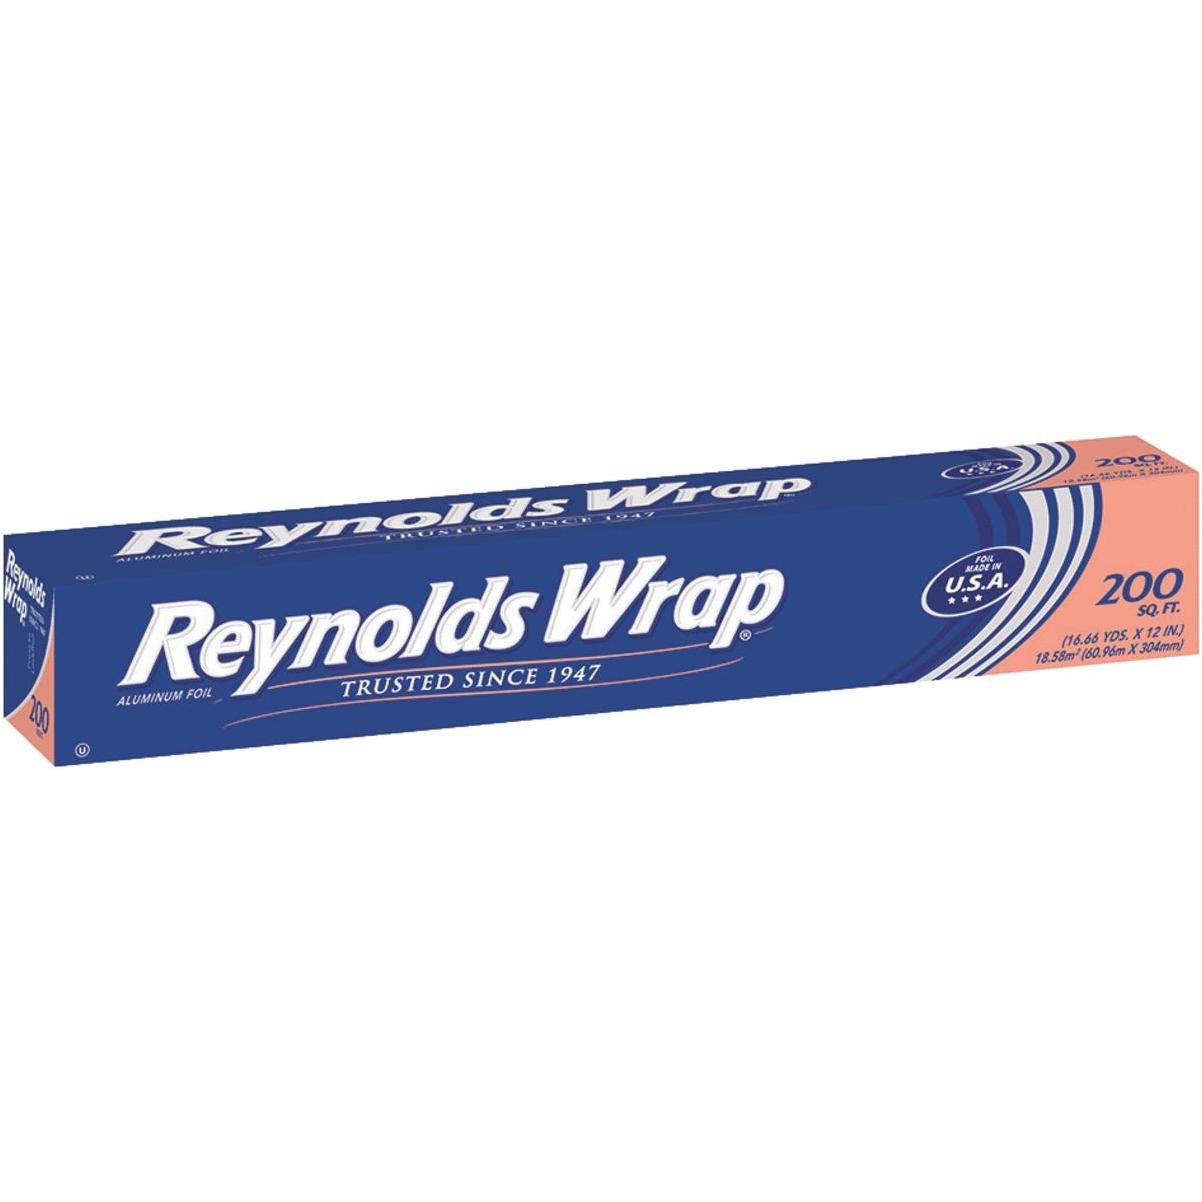 Reynolds Wrap 200 Sq. Ft. Aluminum Foil